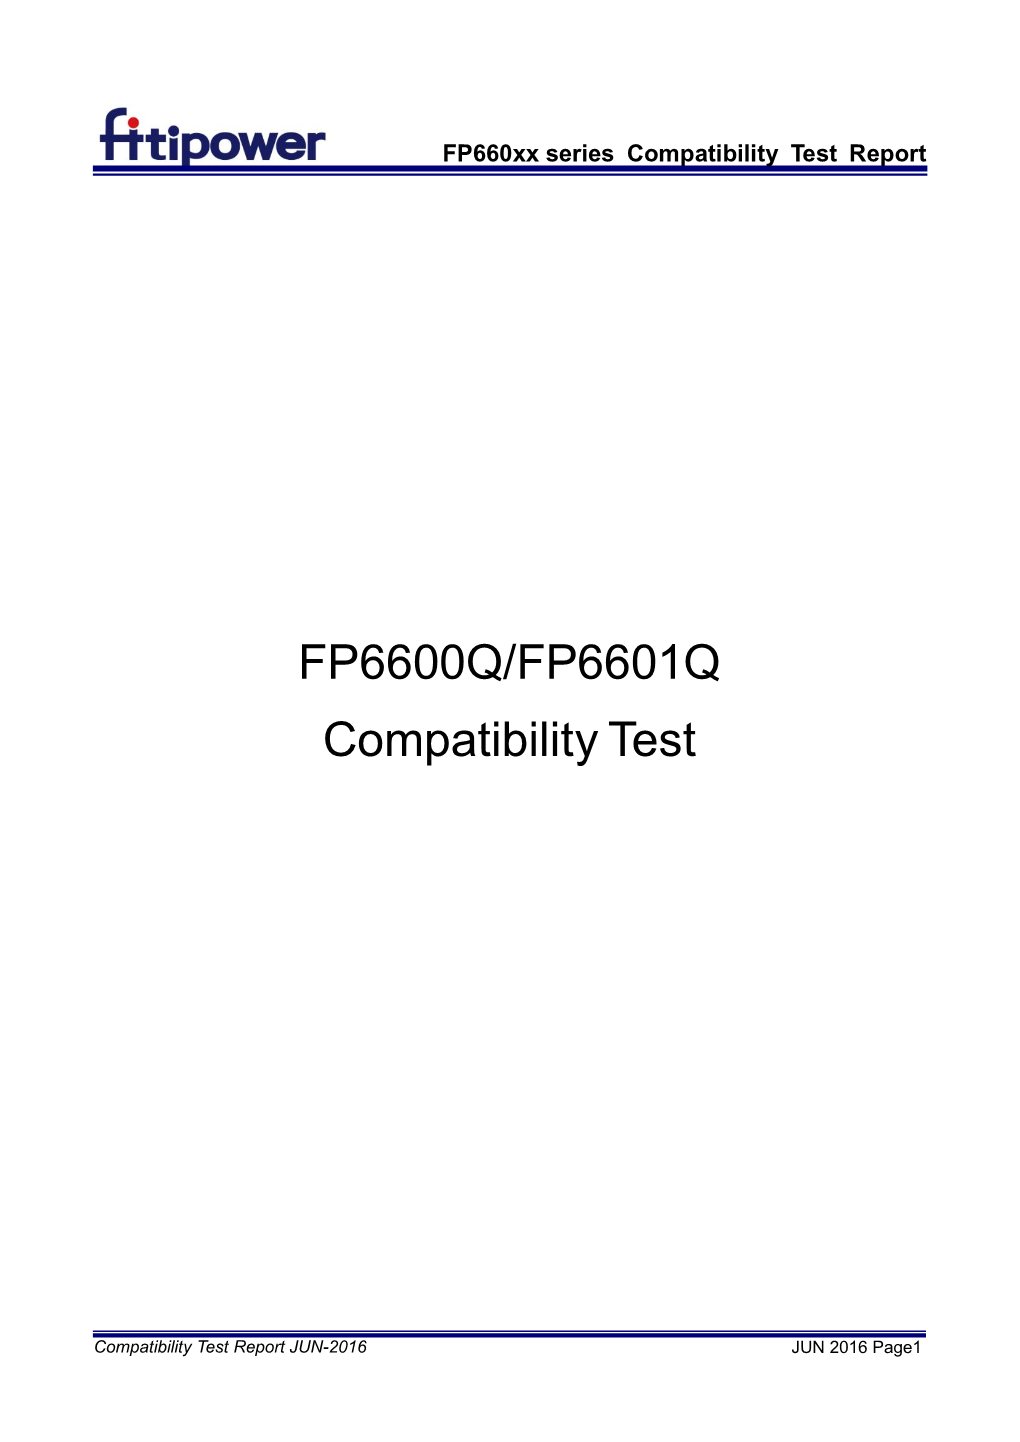 FP6600Q/FP6601Q Compatibility Test